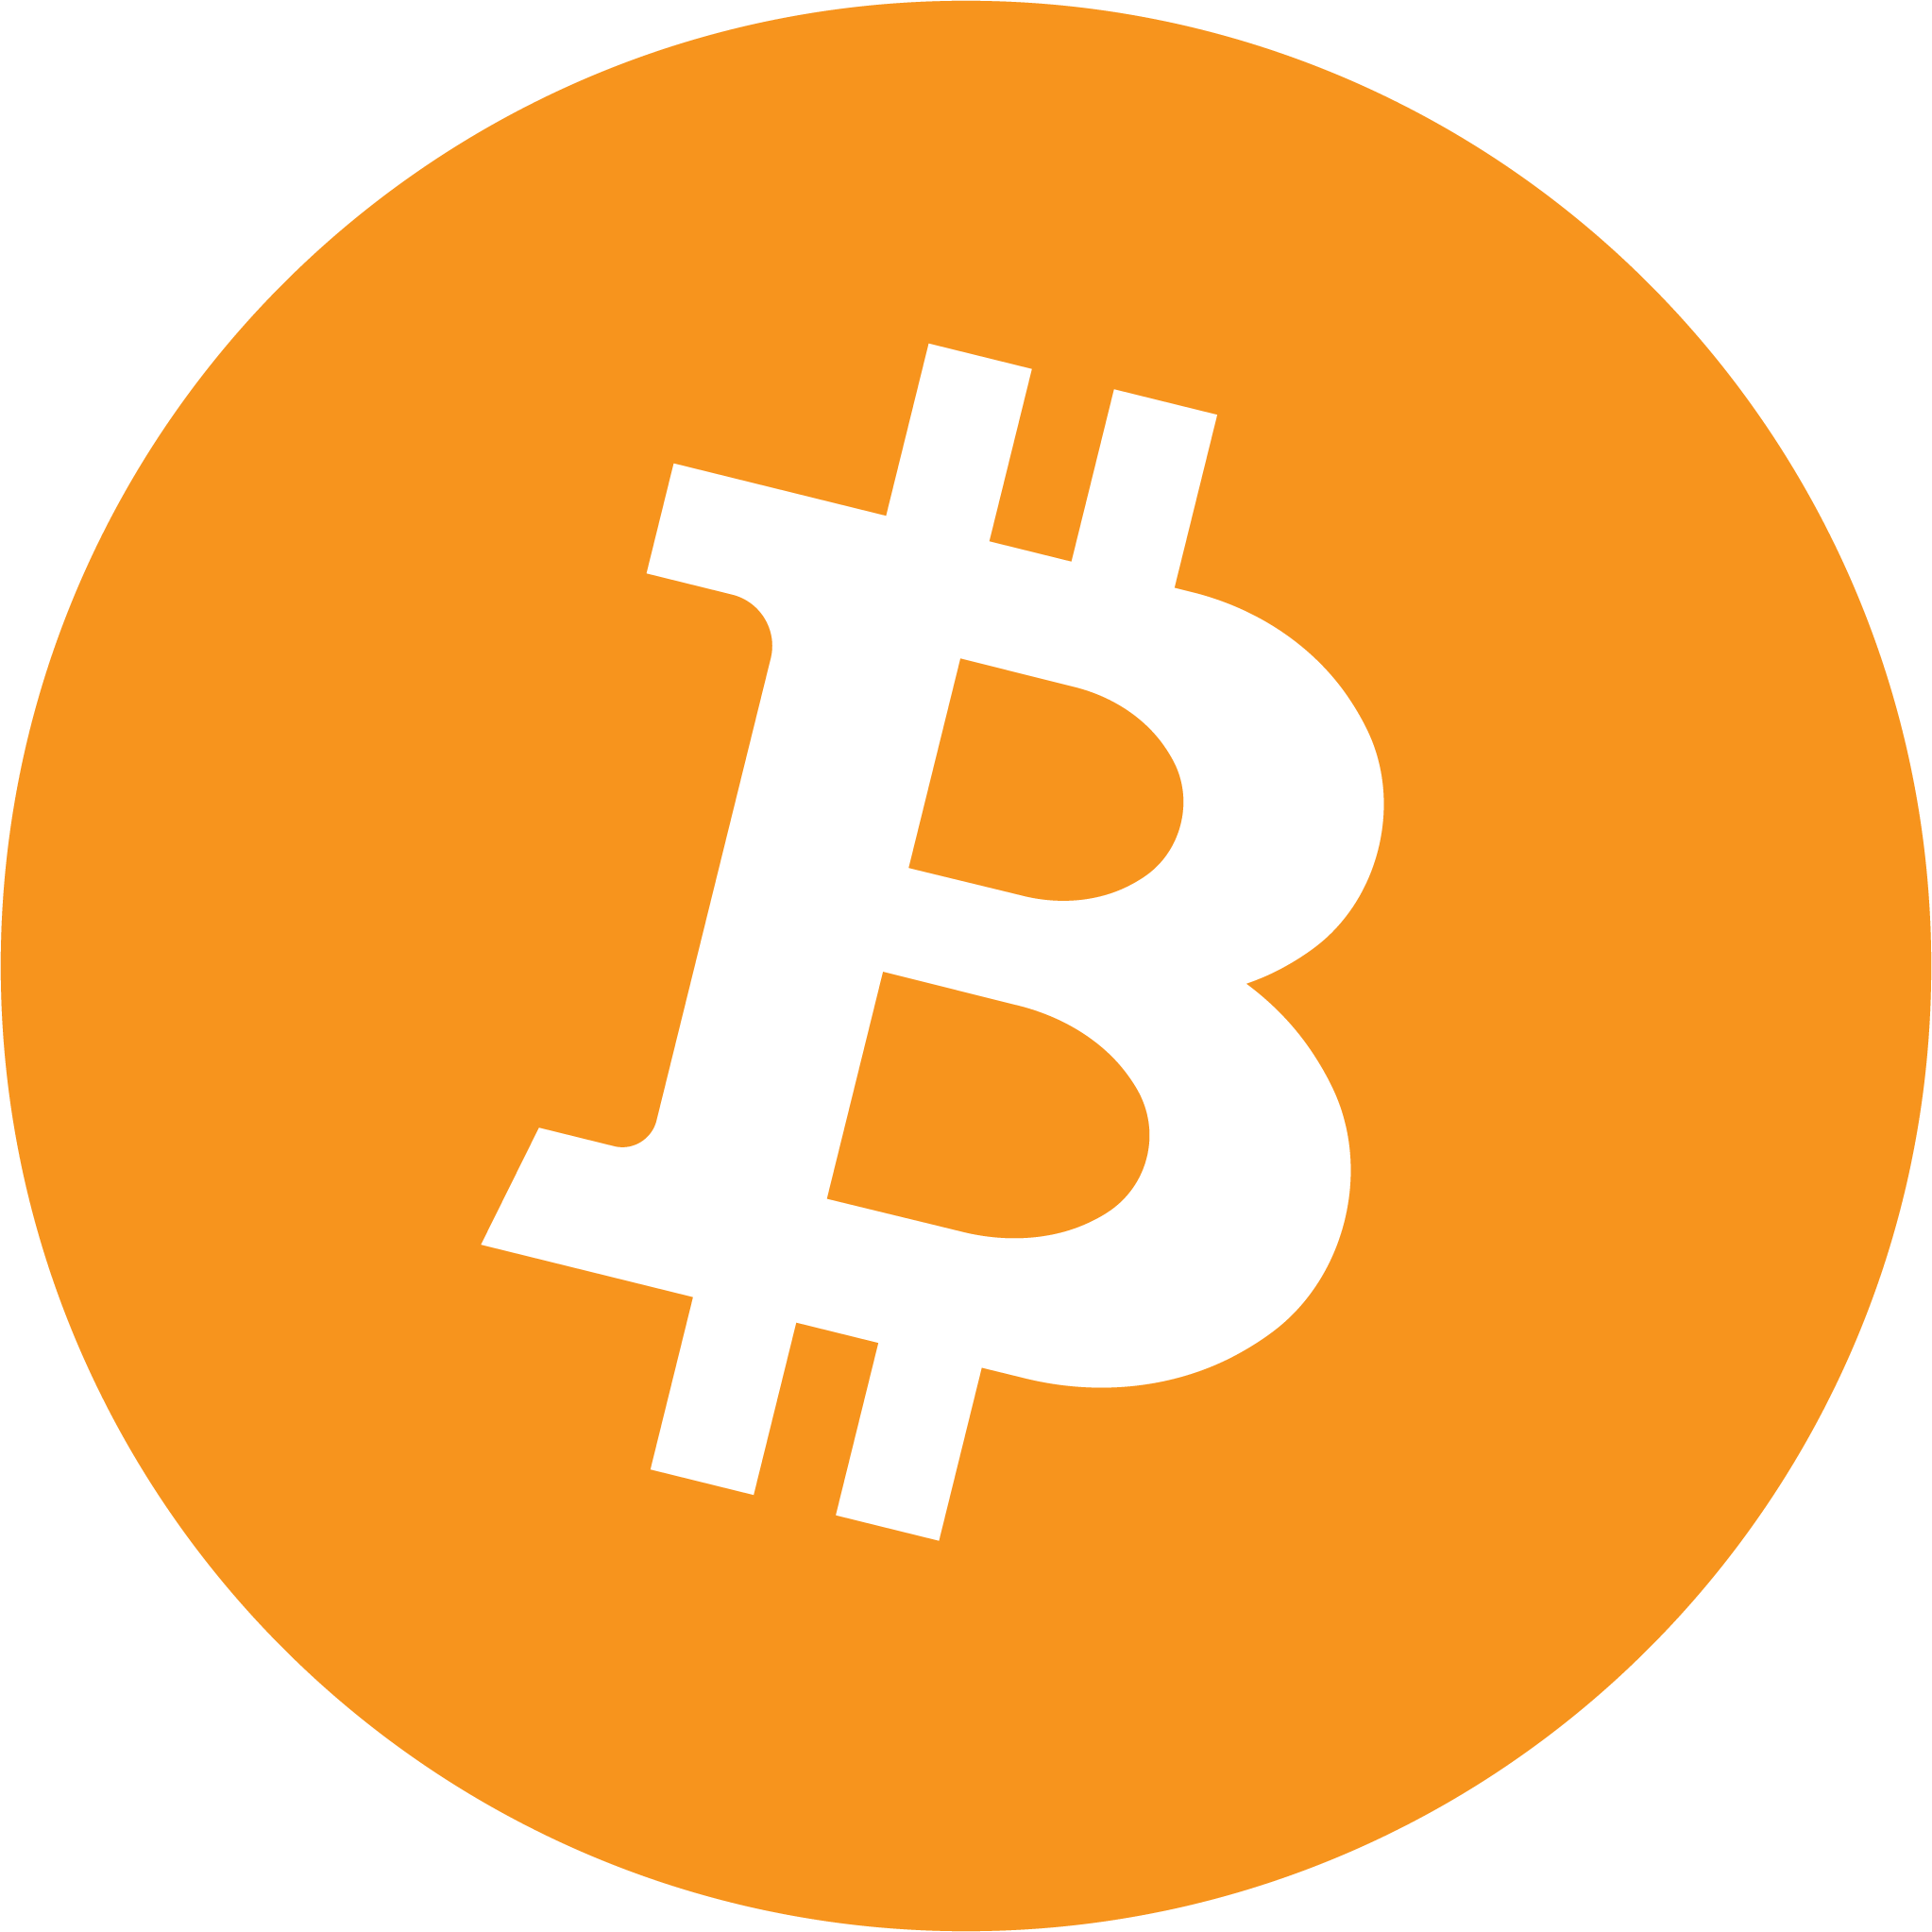 What's the Orange Circle Logo - Bitcoin Symbol and Logo Origins